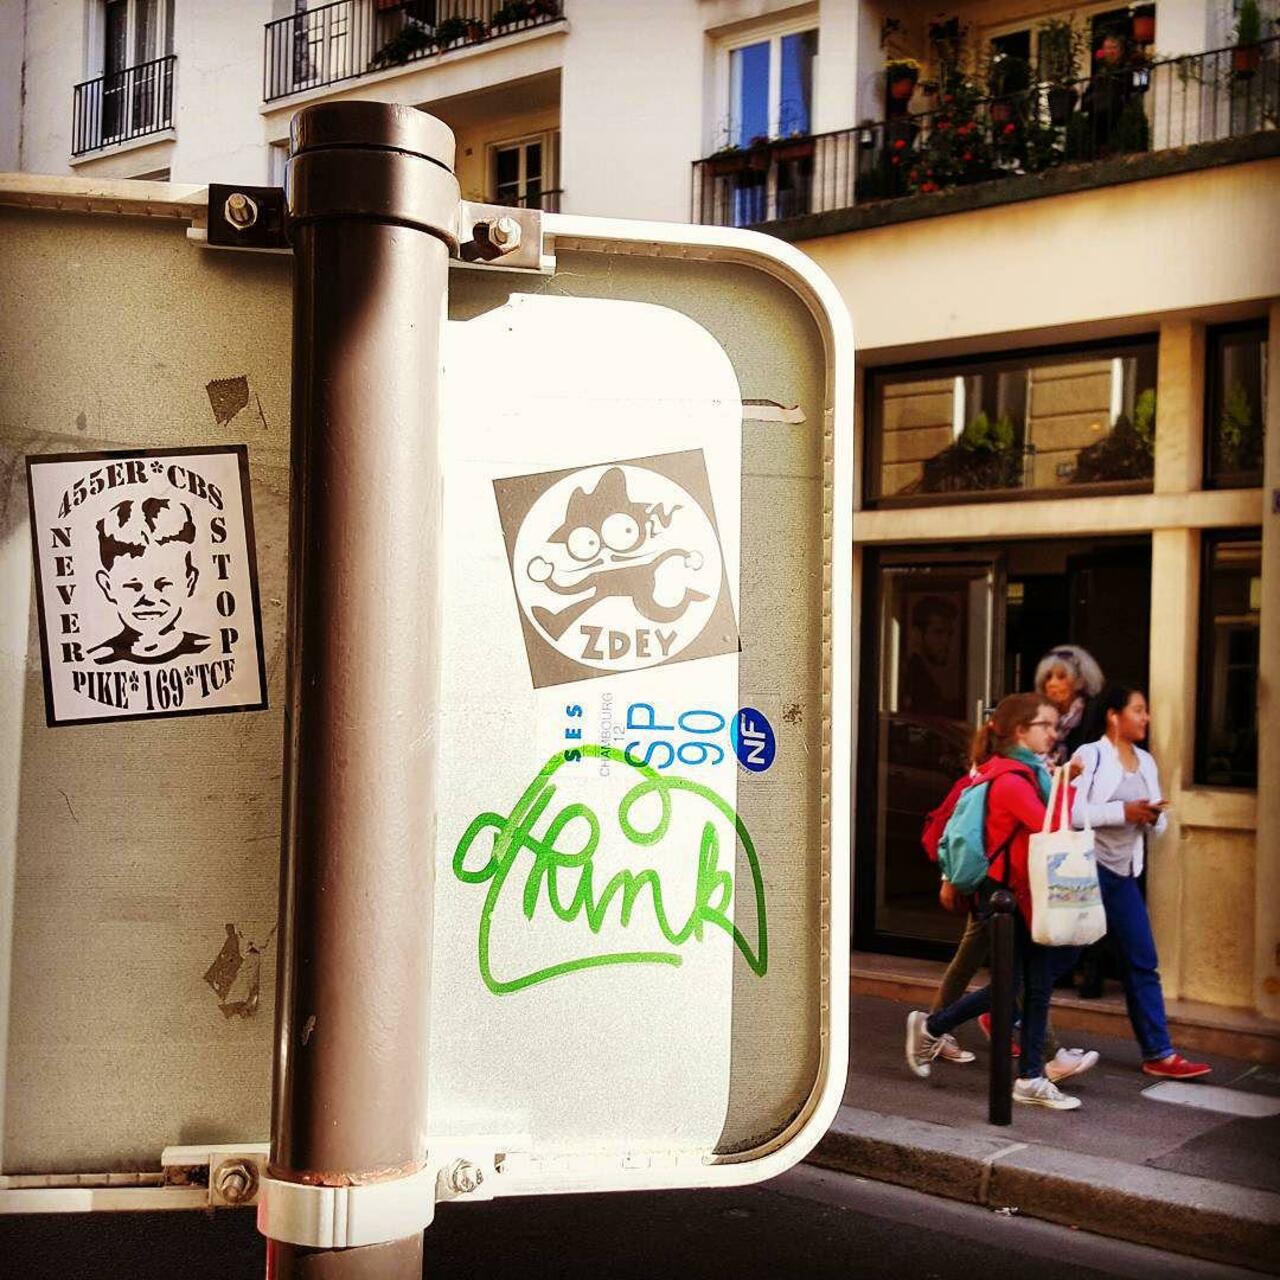 #Paris #graffiti photo by @the169 http://ift.tt/1KXc8GQ #StreetArt http://t.co/uUaYlodi6S